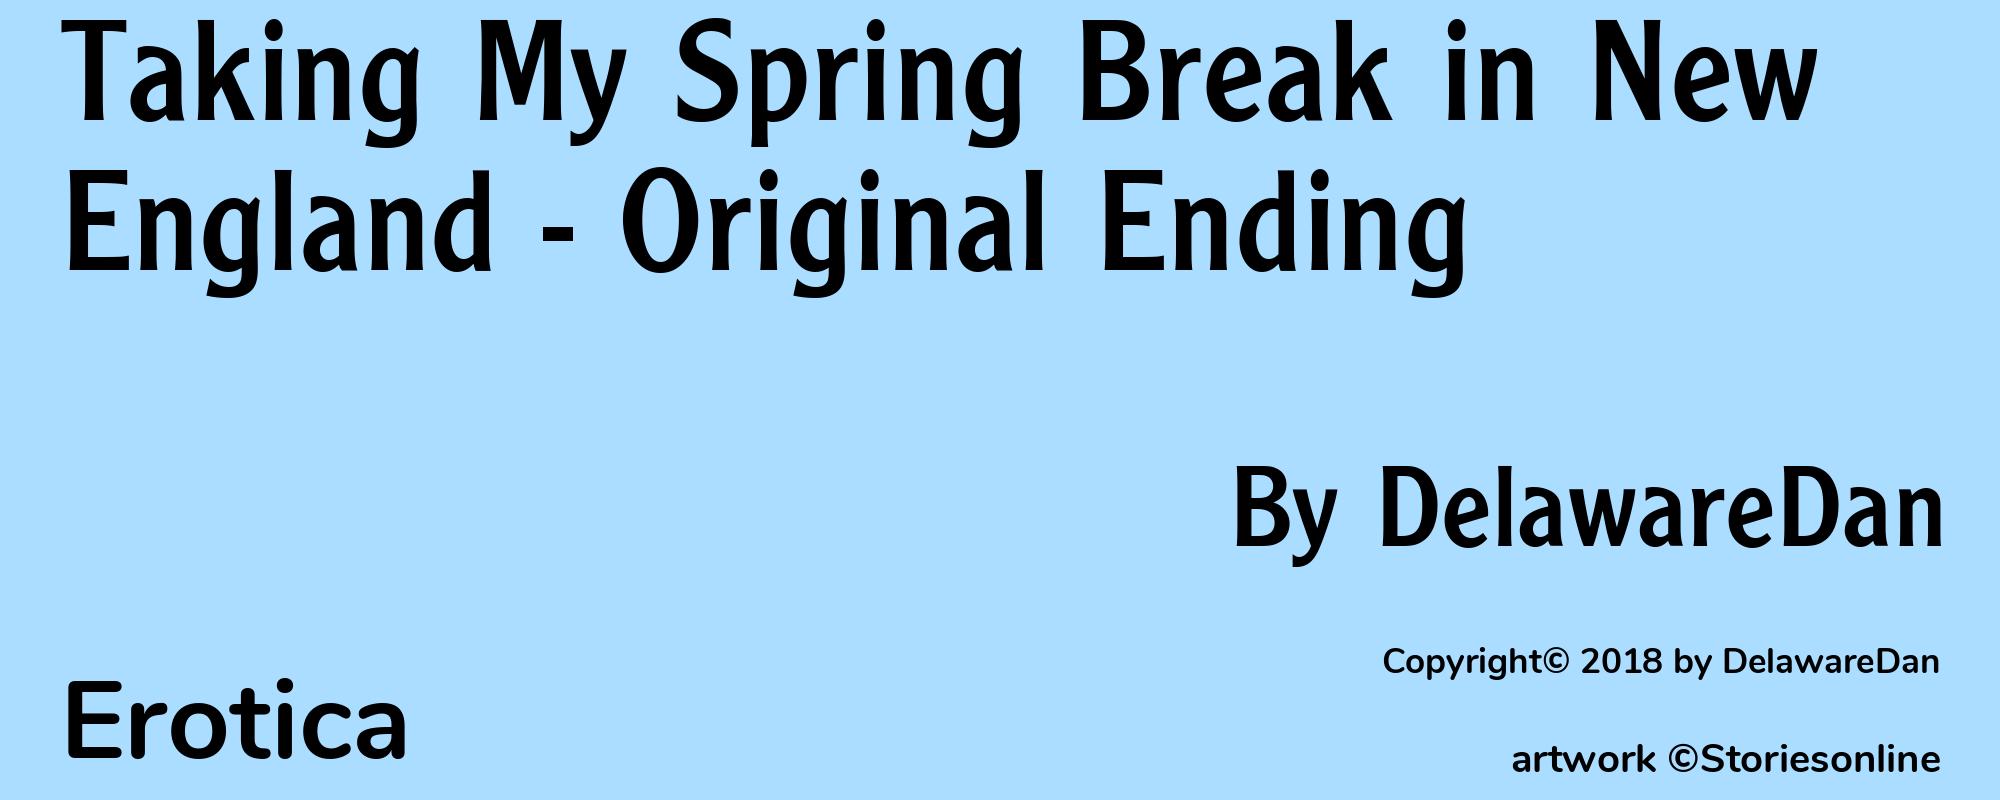 Taking My Spring Break in New England - Original Ending - Cover